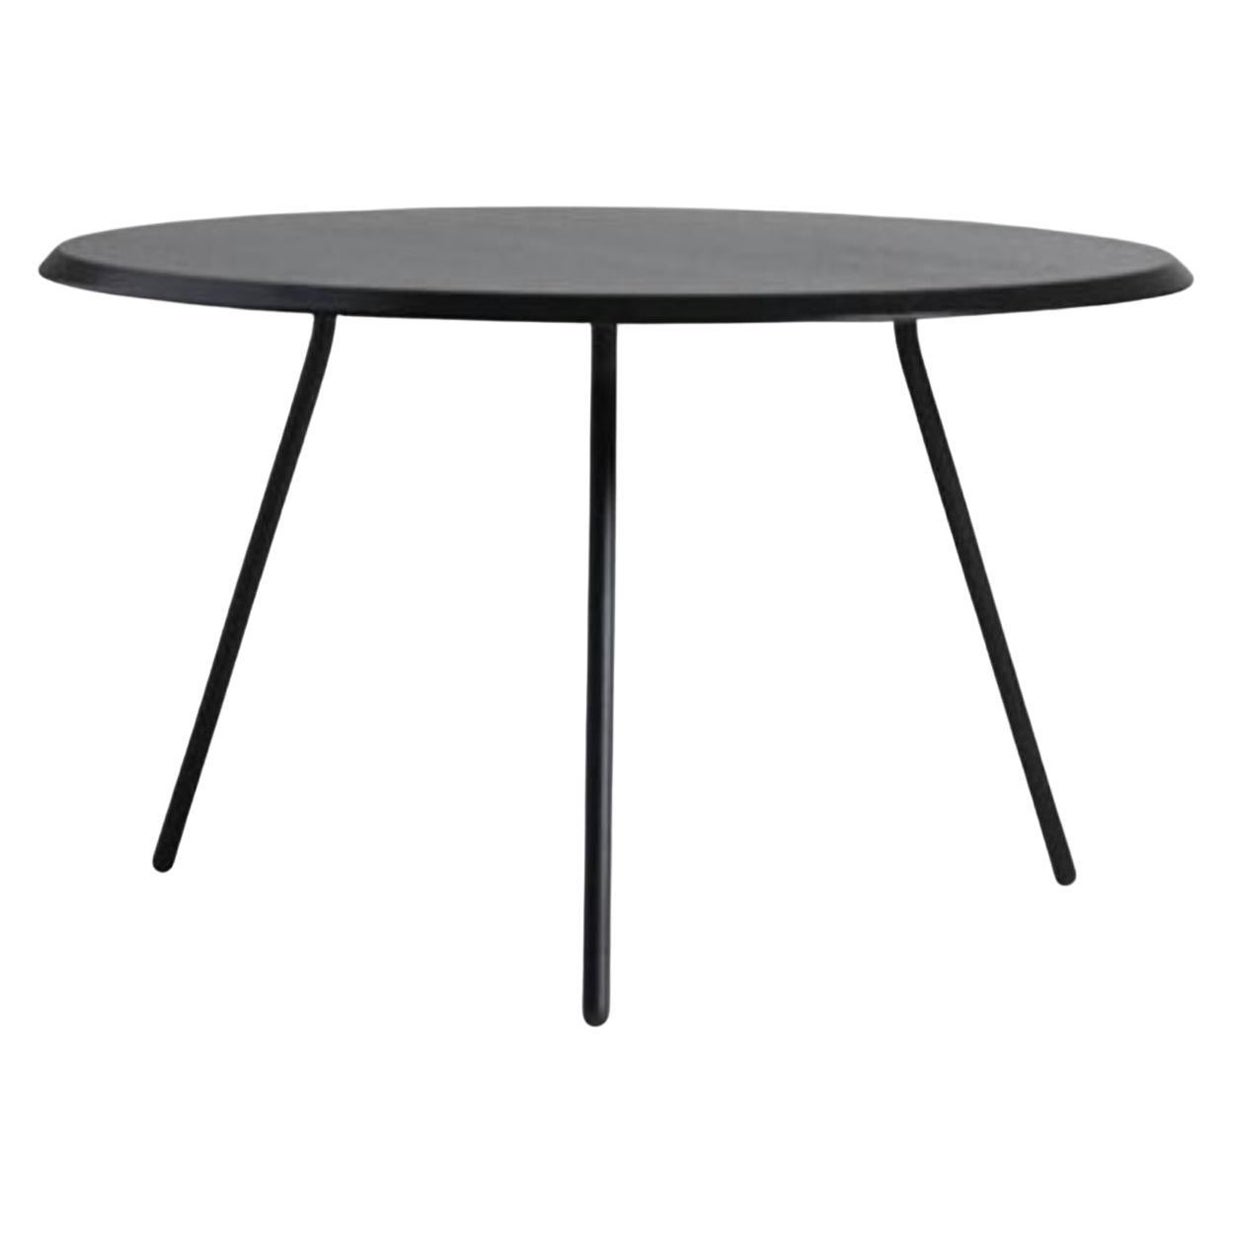 Black Ash Soround Coffee Table 75 by Nur Design